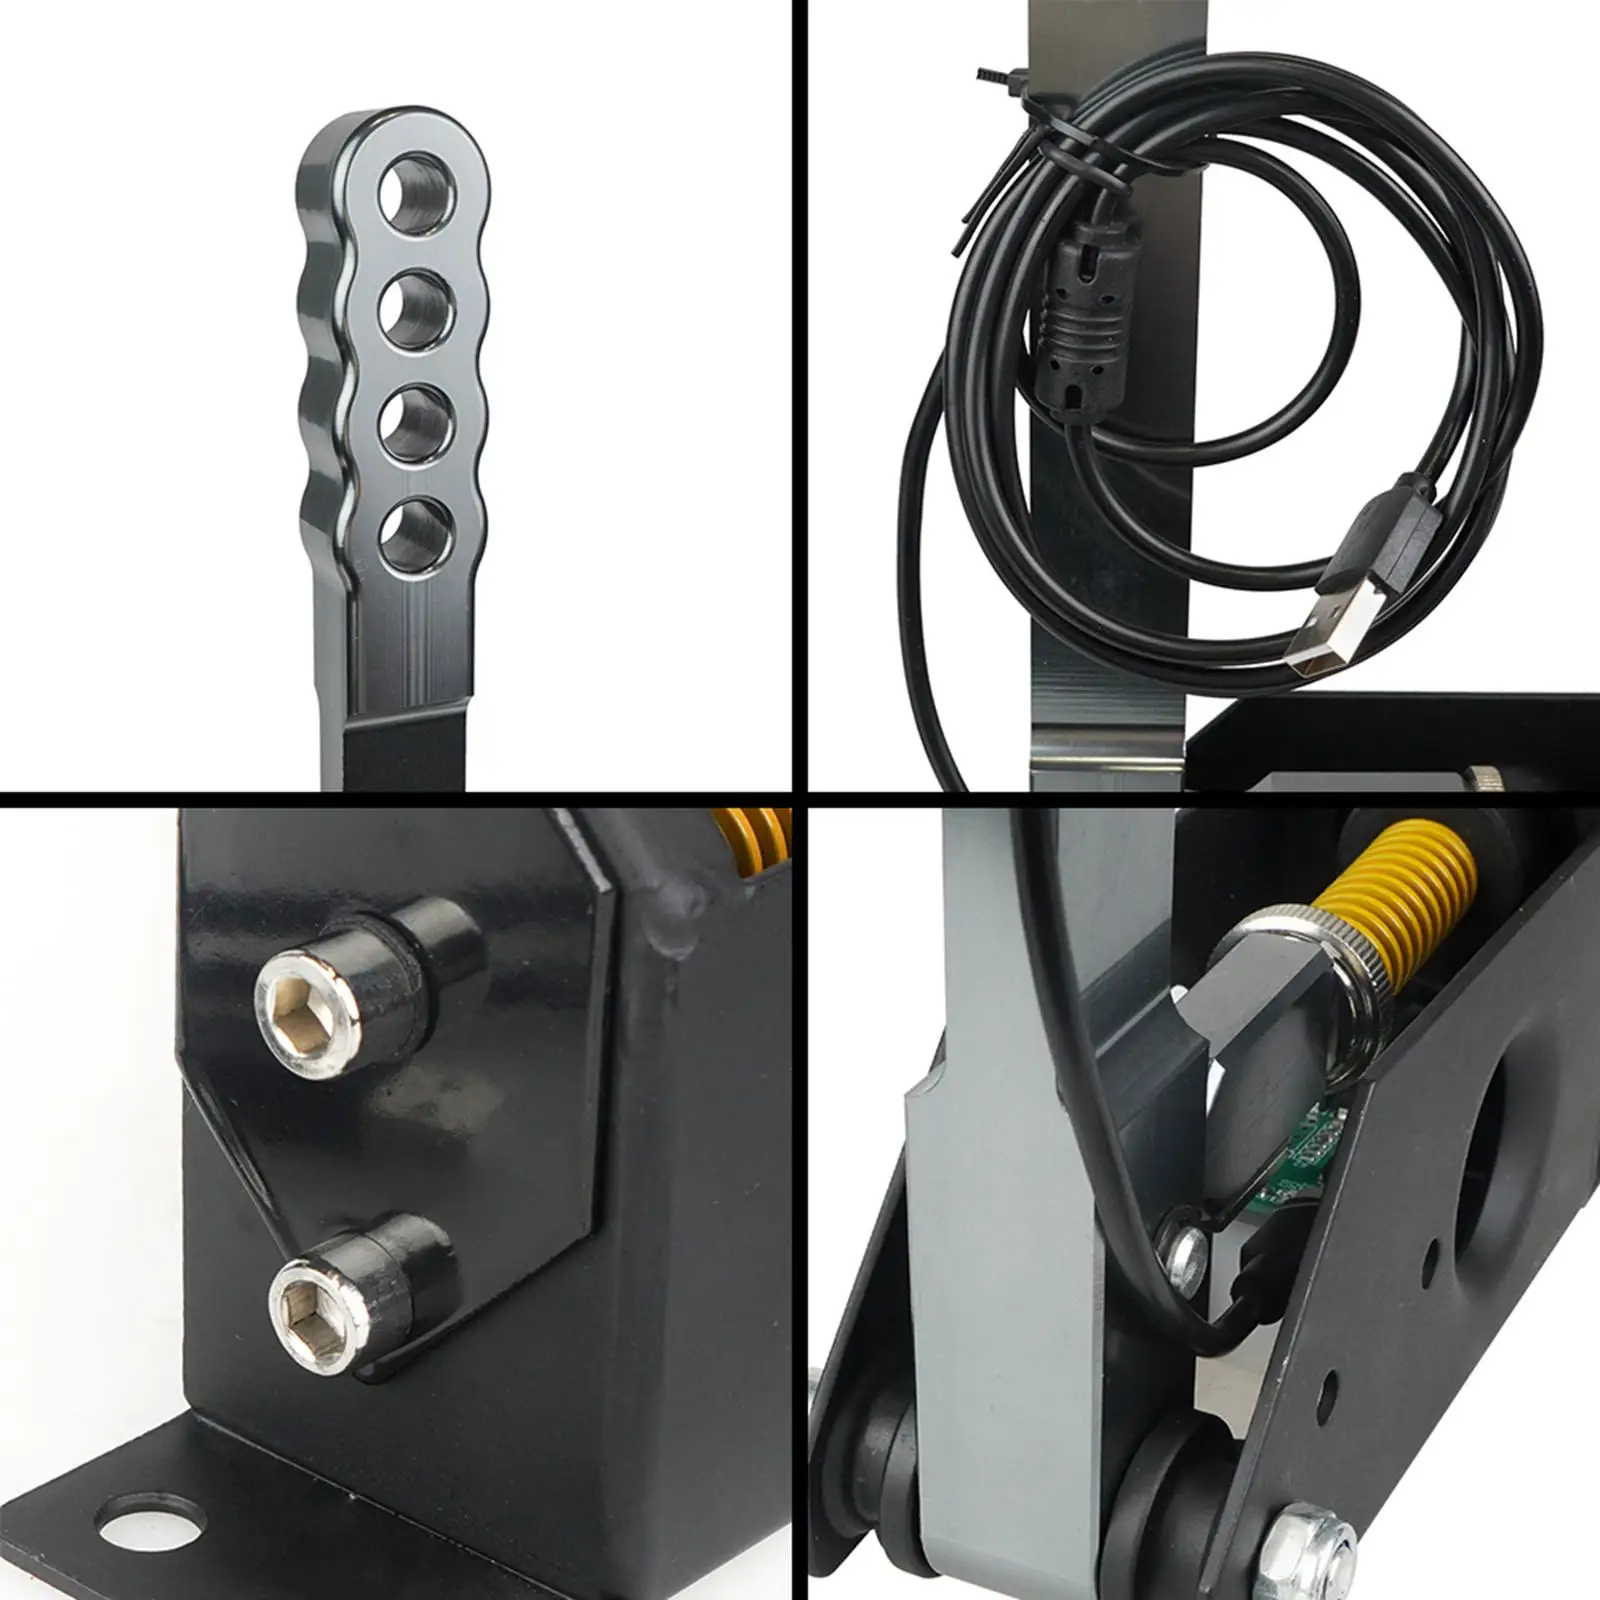 Brake System Handbrake Spare Parts 14 Bit Anti Wear Premium USB Easy to Install Handbrake Clamp for Logitech G29 G27 G25 PC